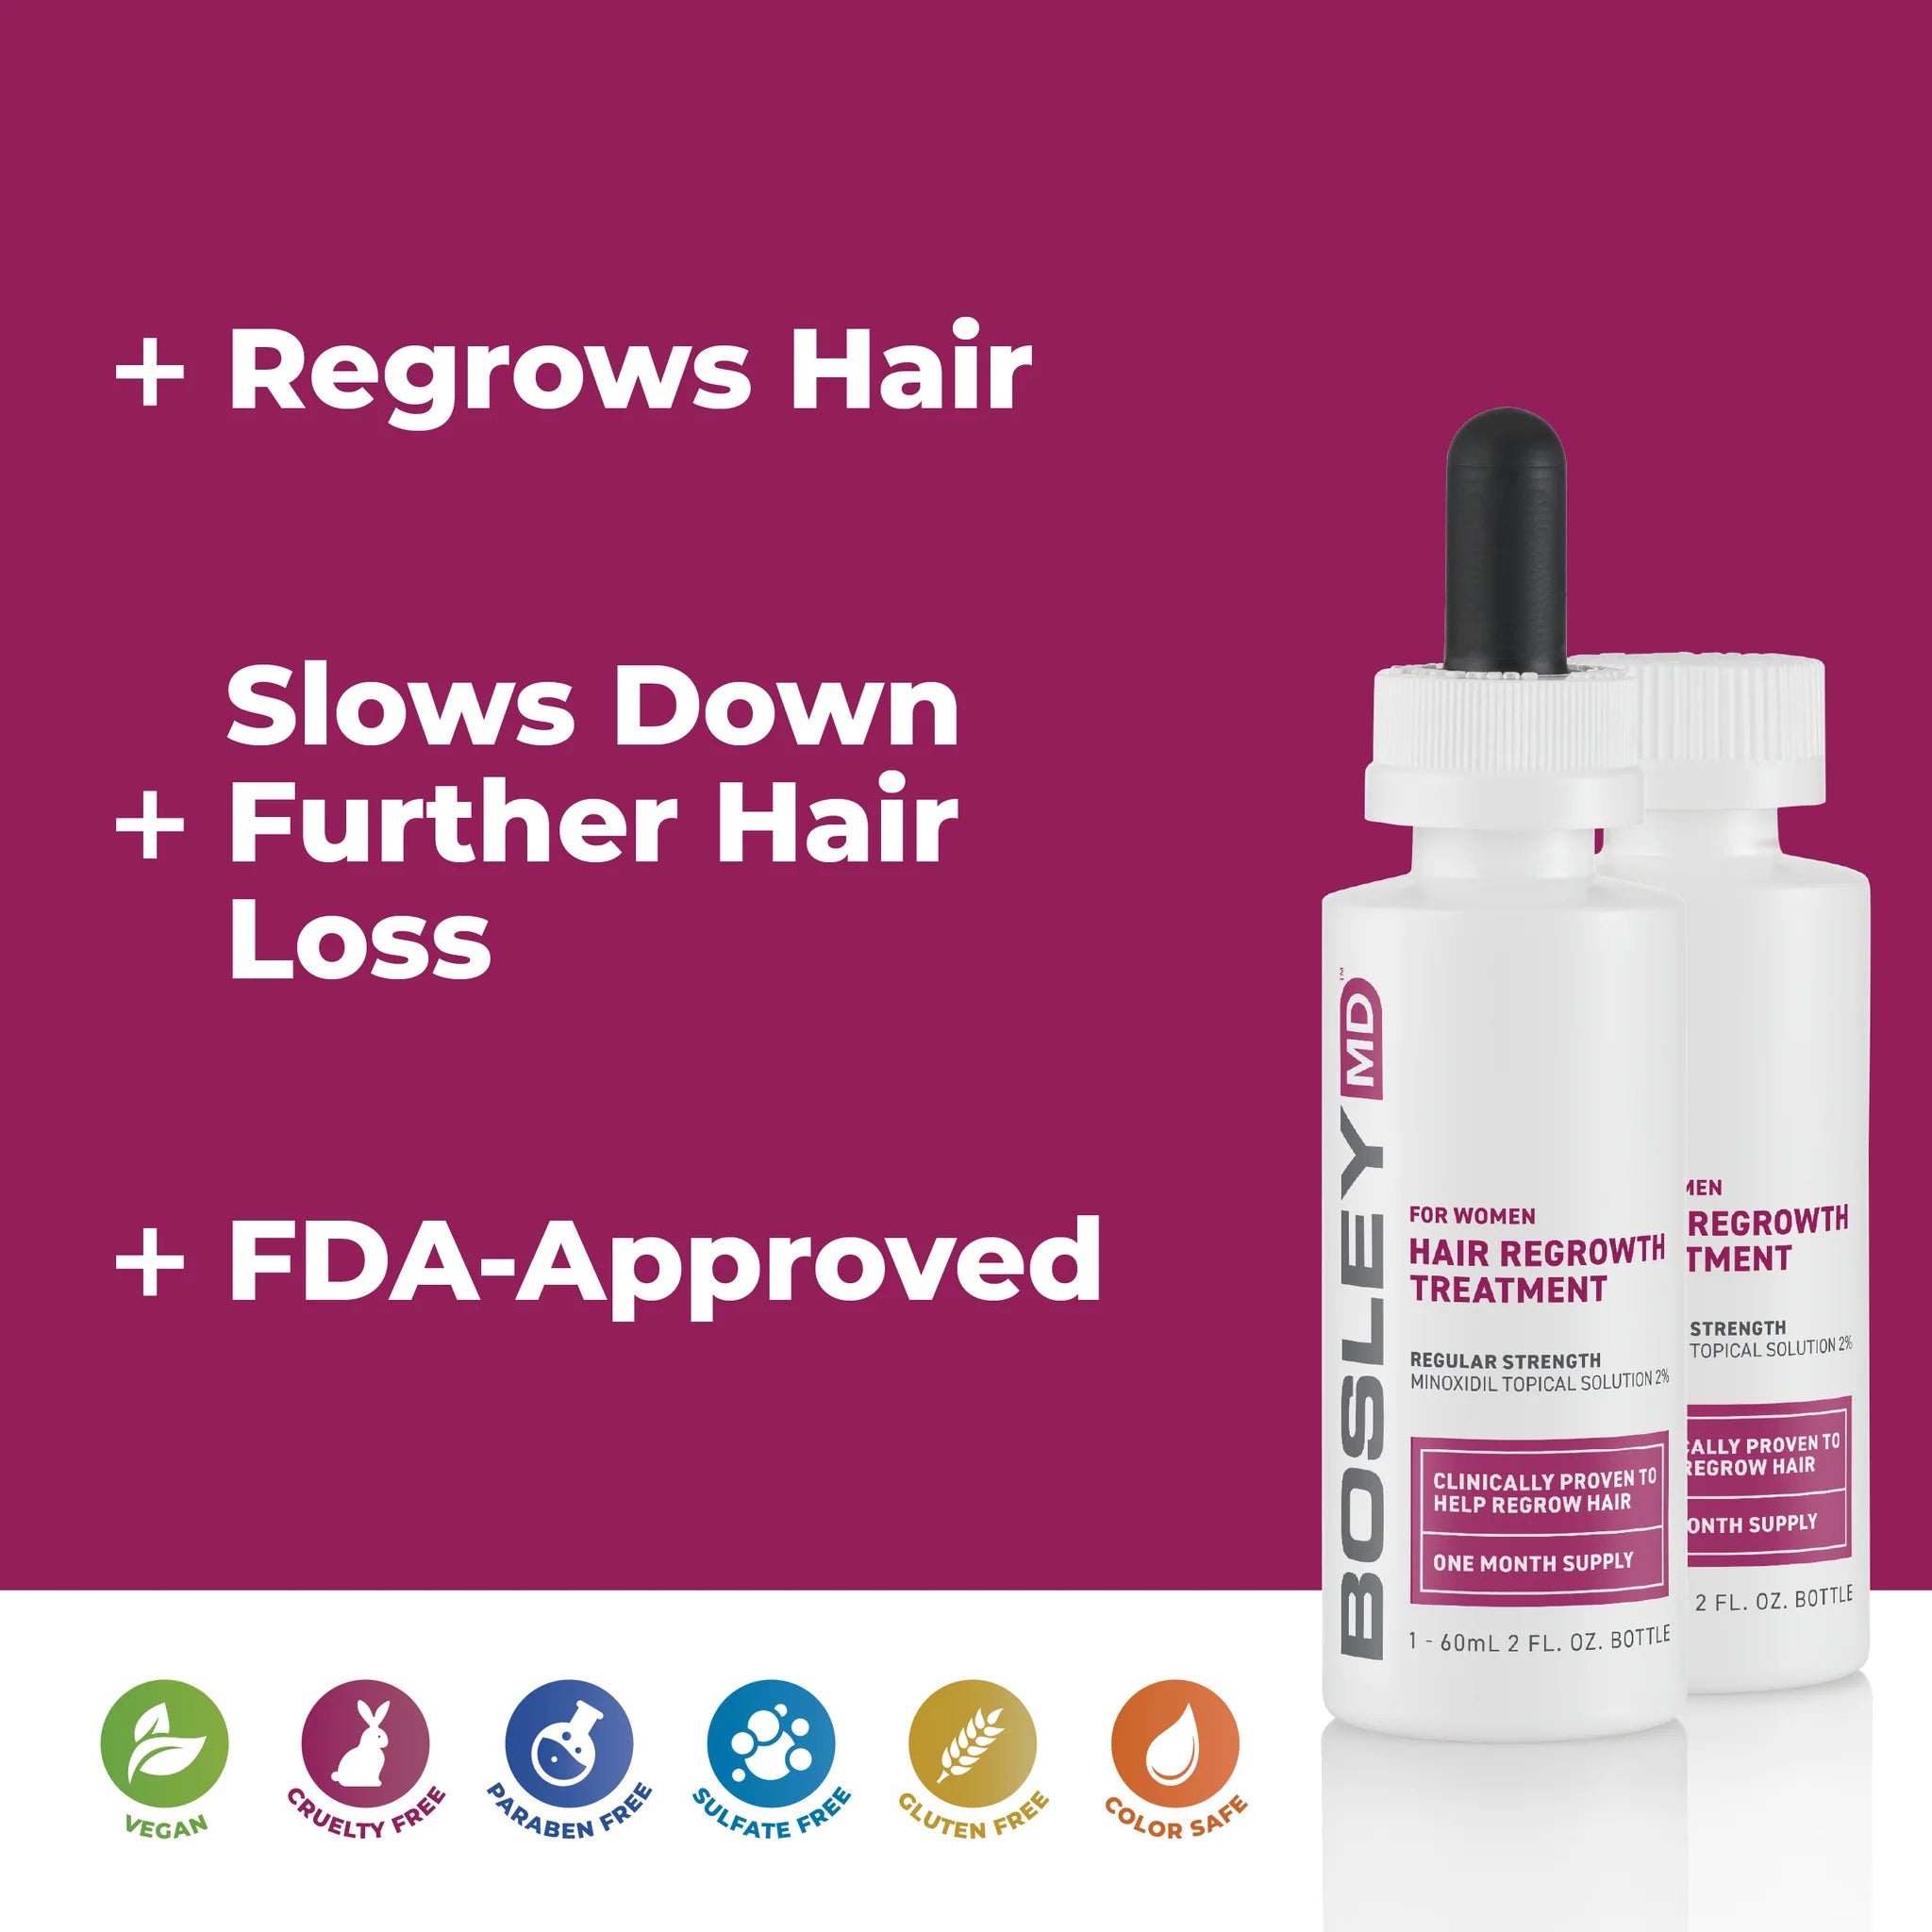 BosleyMD Hair Regrowth Treatment Benefits